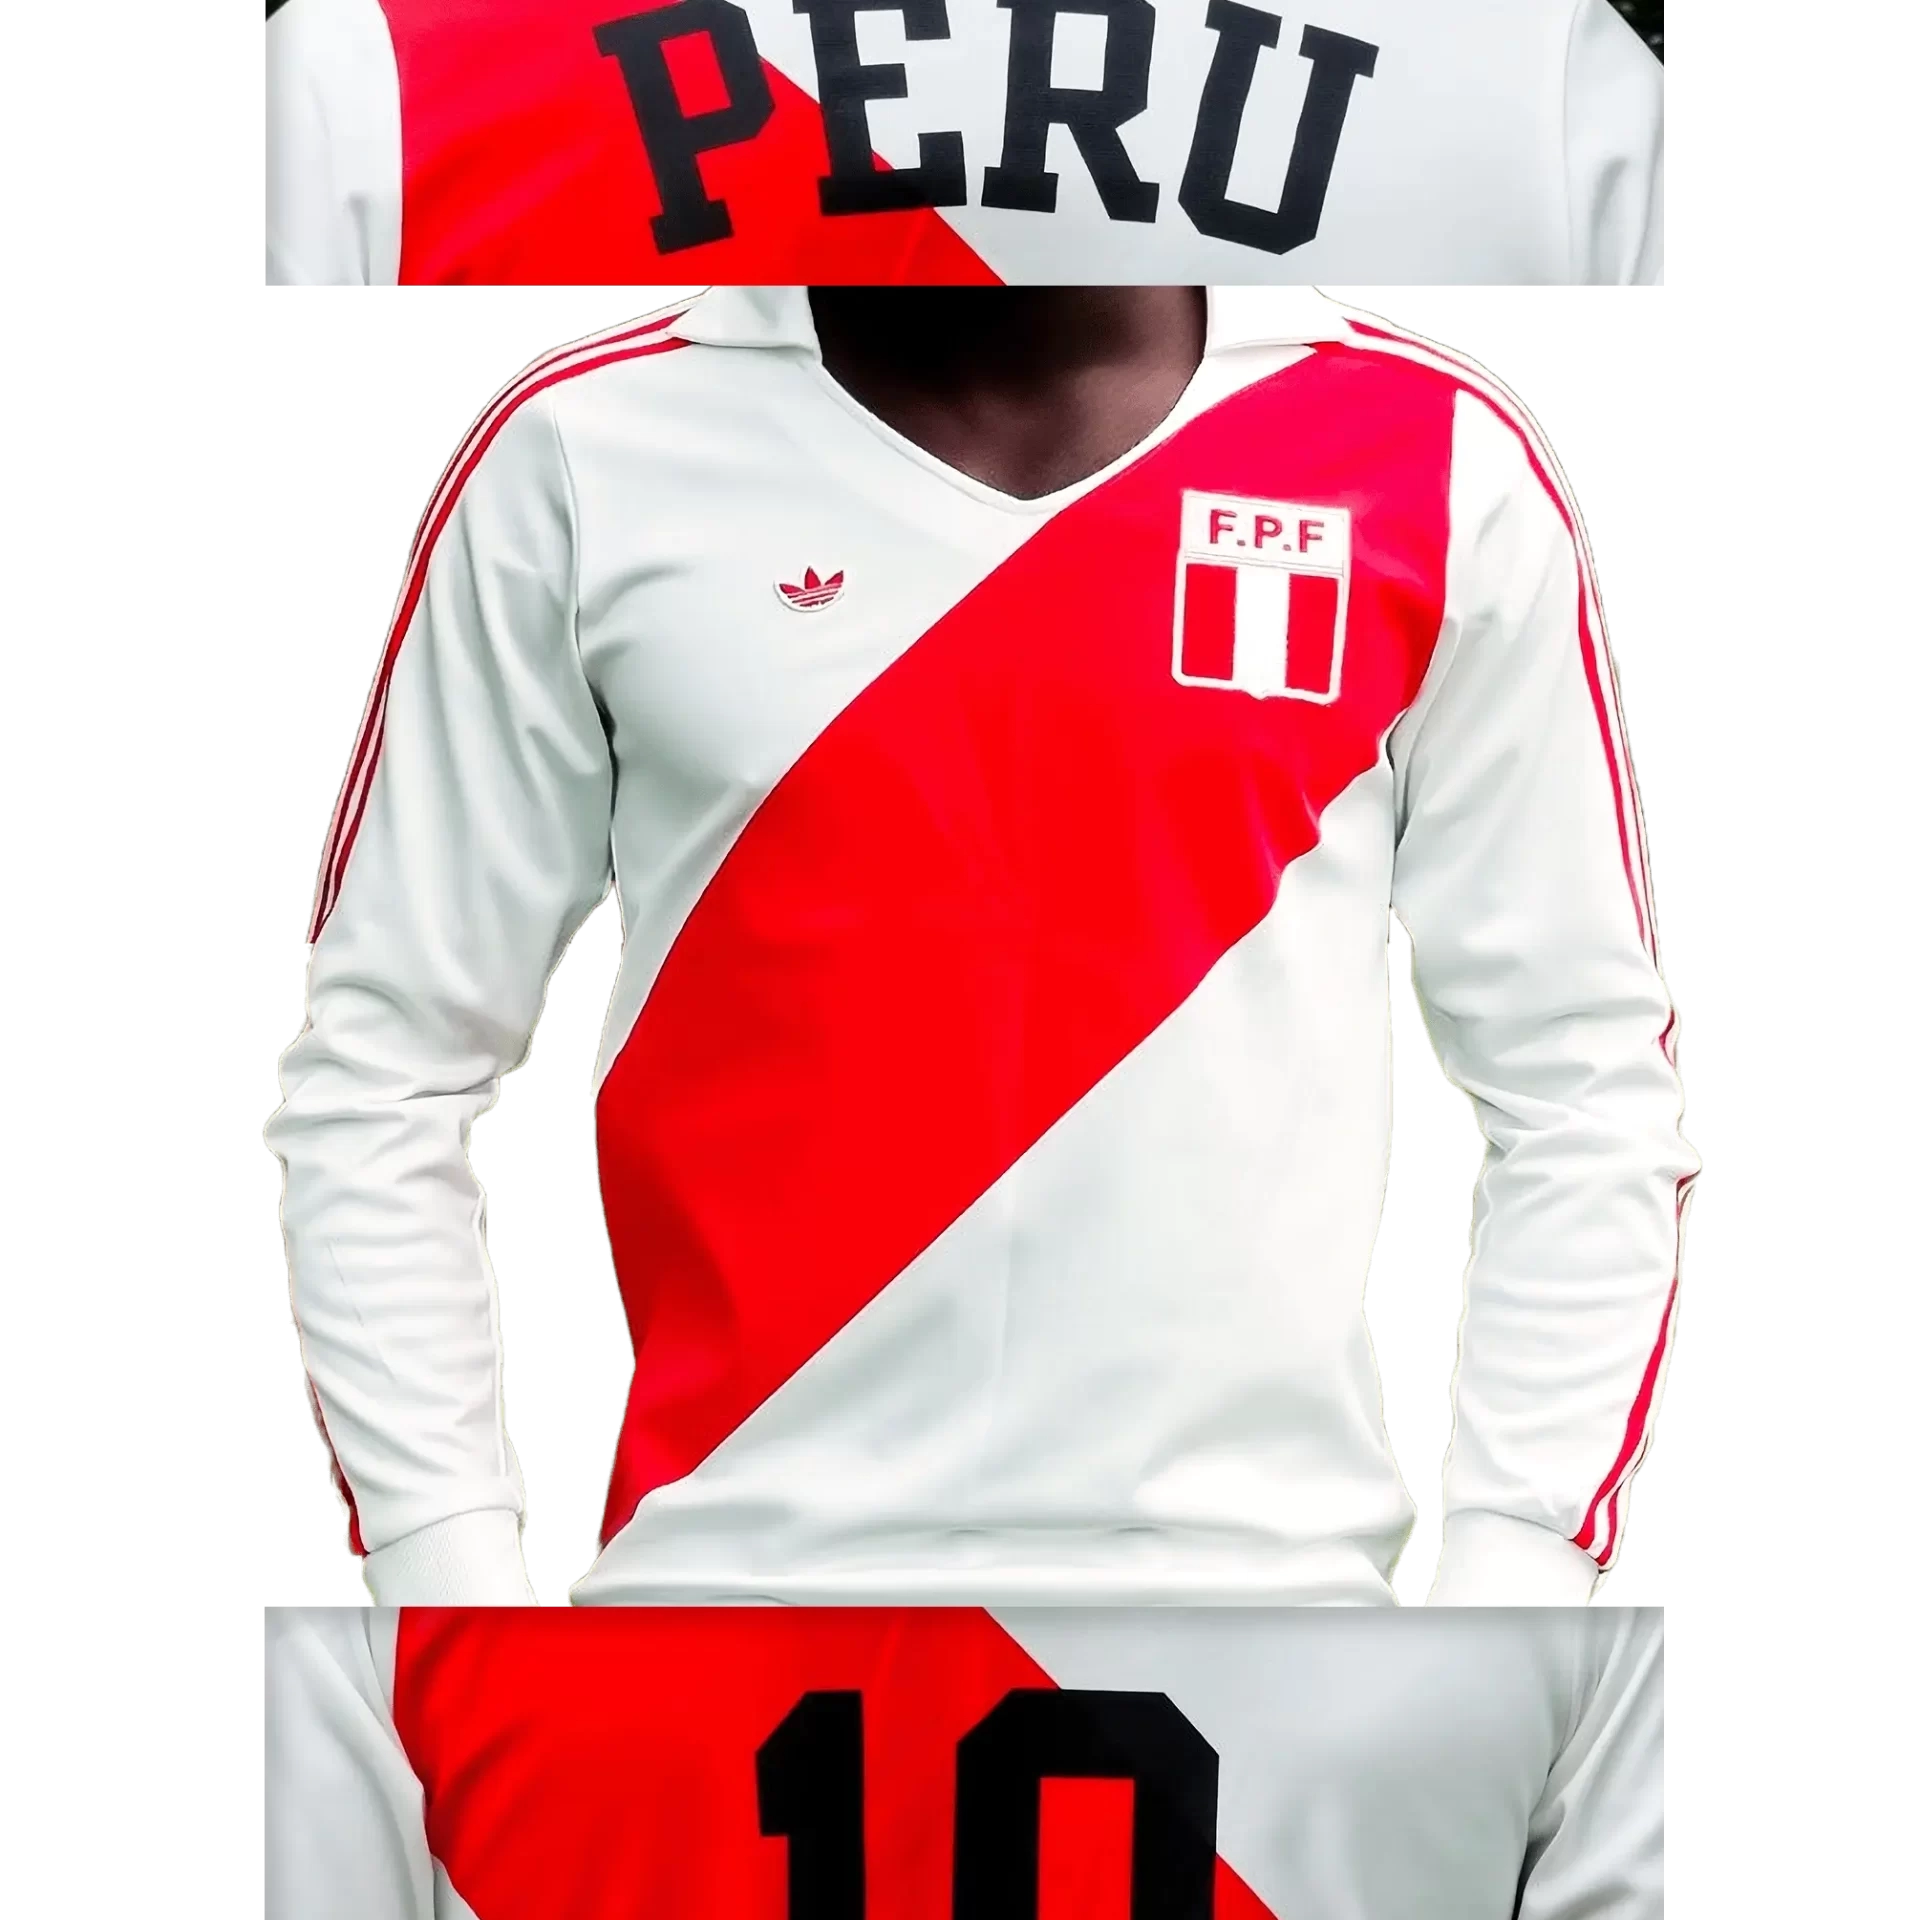 Men's 2005 Peru '78 Cubillas LS by Adidas Originals: Defiance (EnLawded.com file #lmchk56603ip2y123341kg9st)